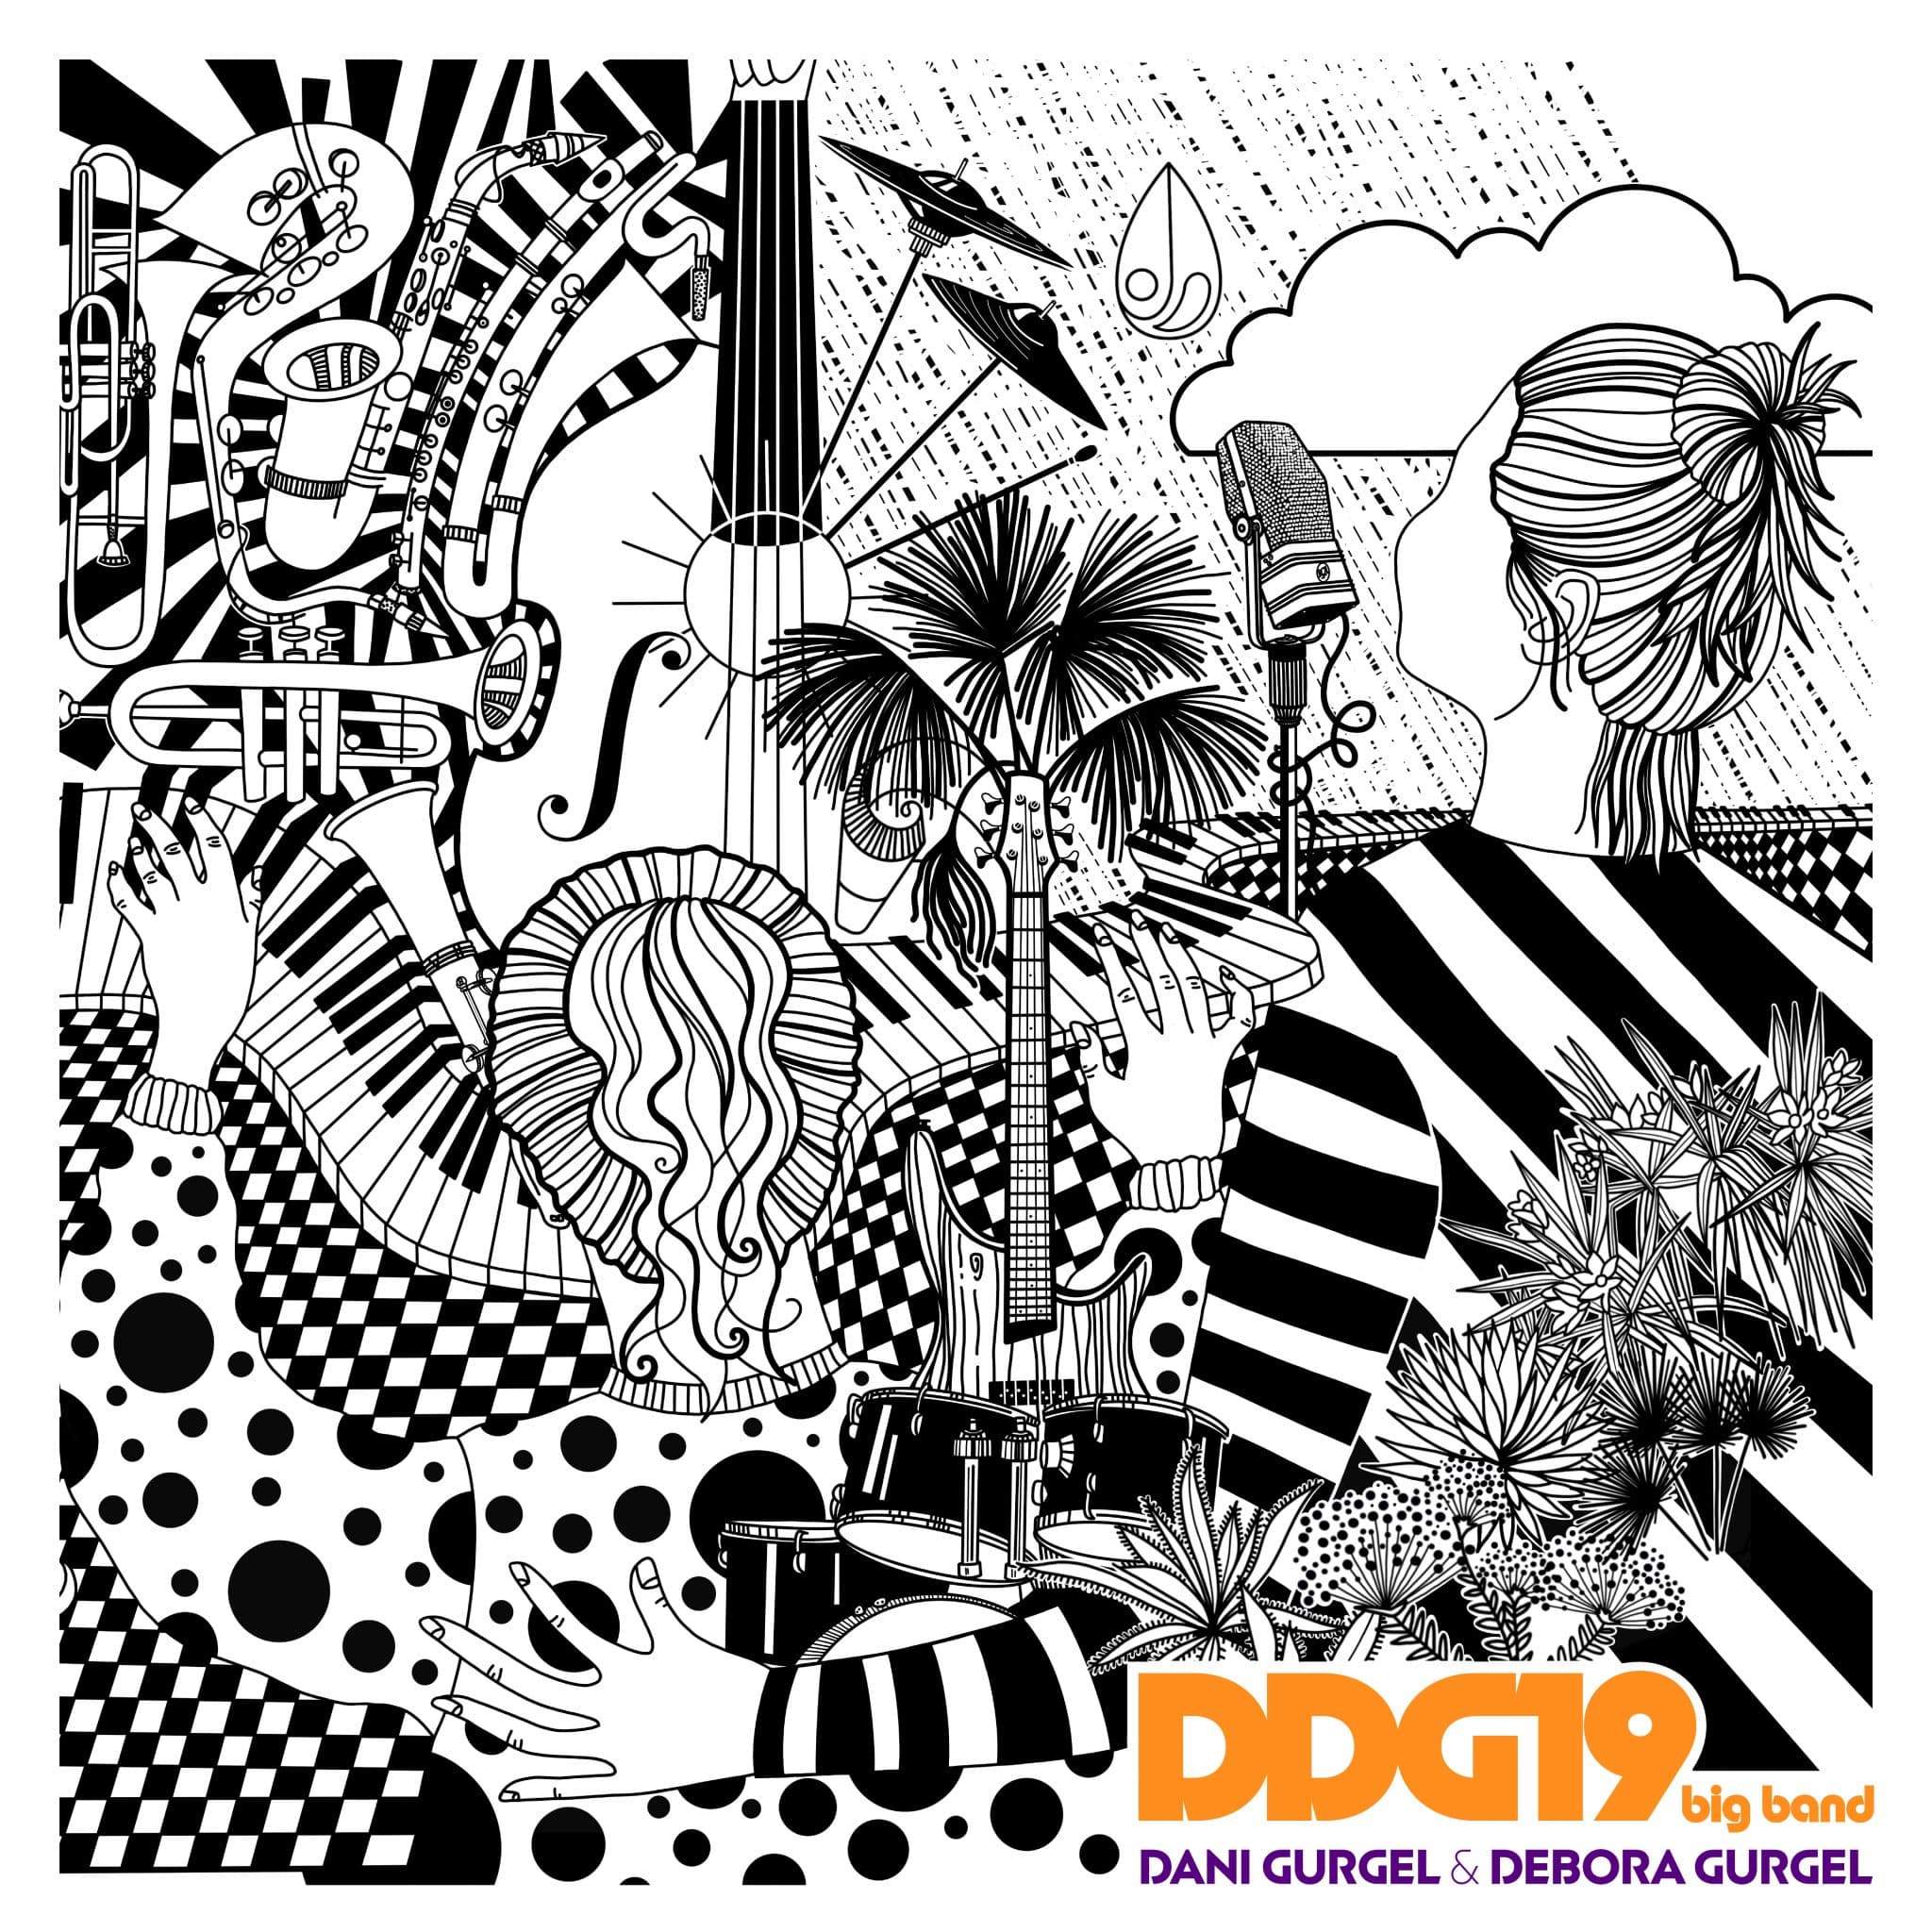 revistaprosaversoearte.com - Dani Gurgel e Debora Gurgel lançam 'DDG19 Big Band'